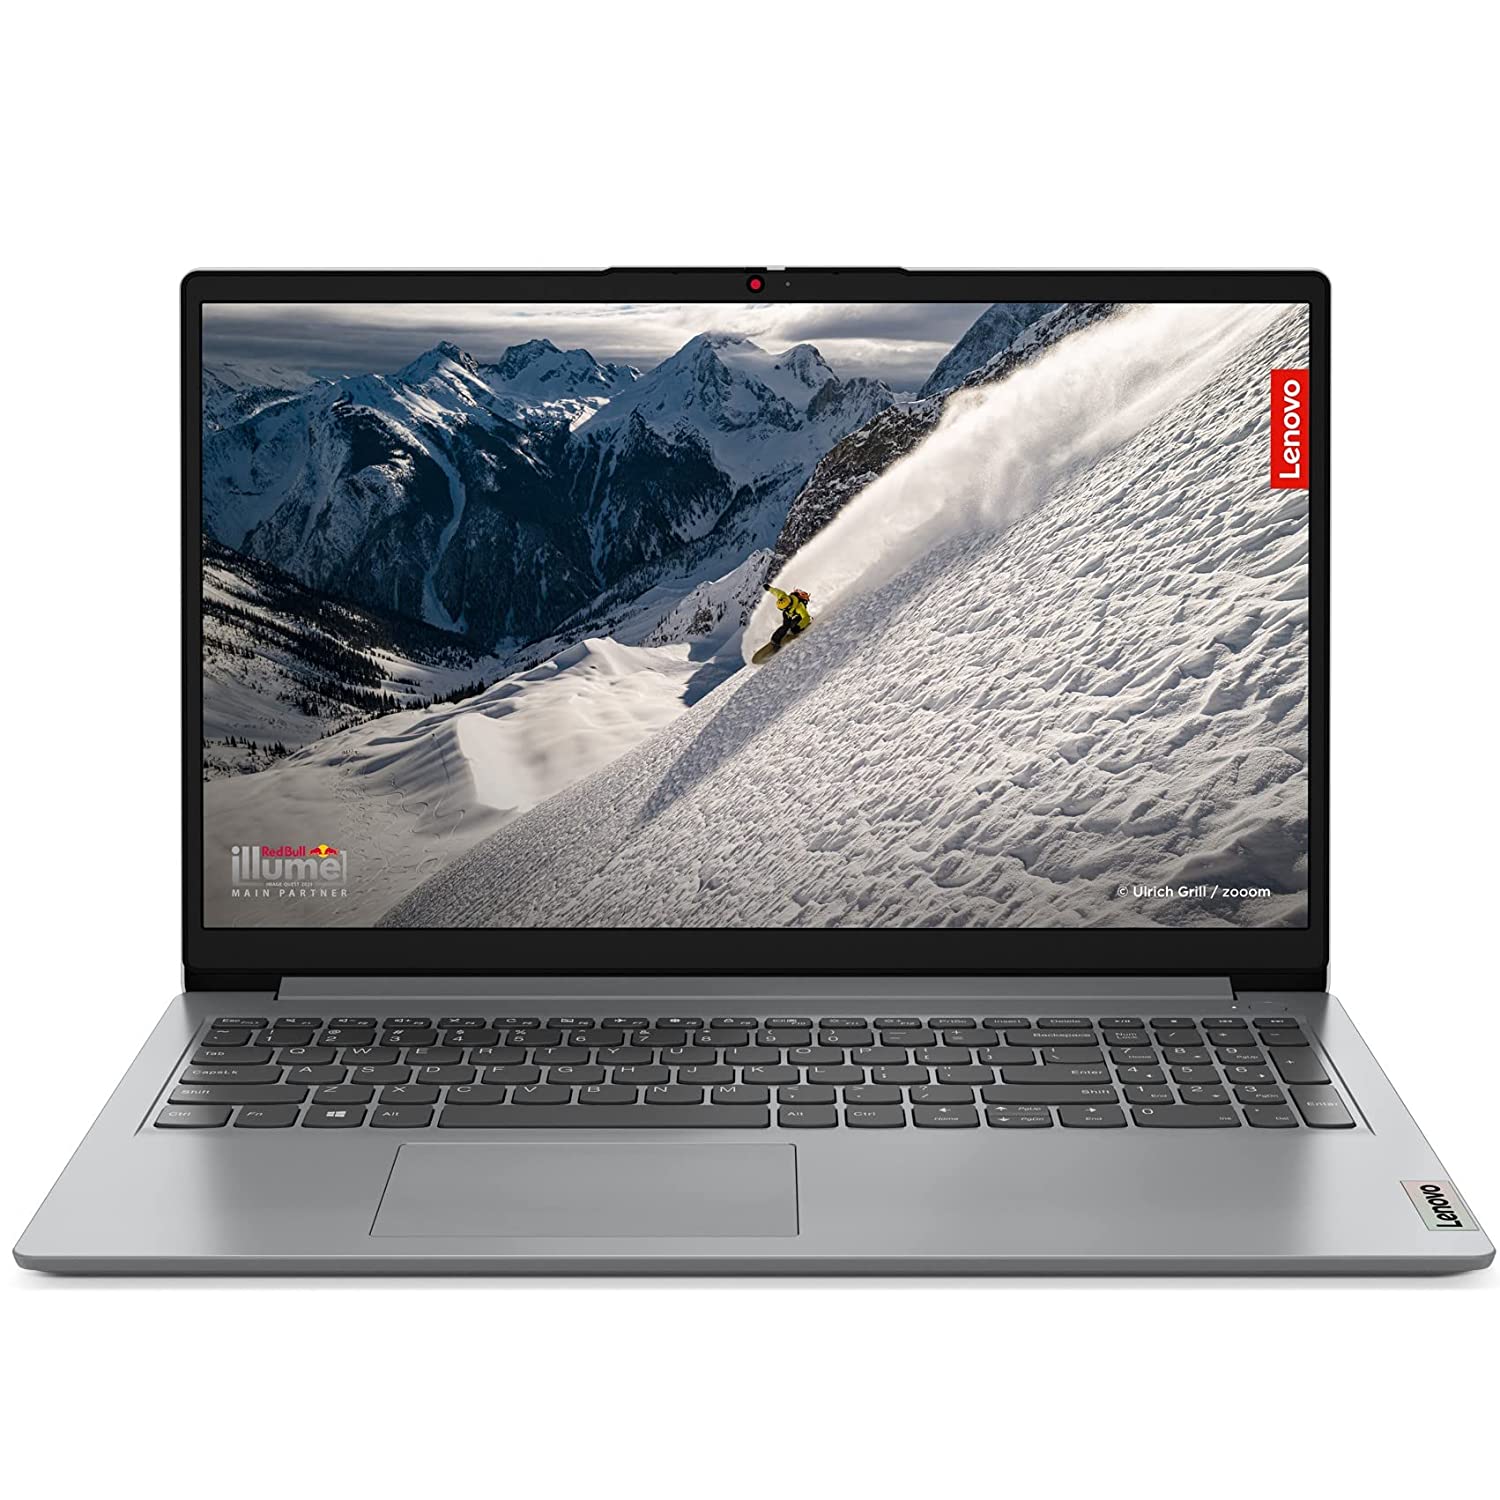 Lenovo IdeaPad Slim 1 AMD Ryzen 5 3500U 15.6' (39.62cm) FHD Thin & Light Laptop